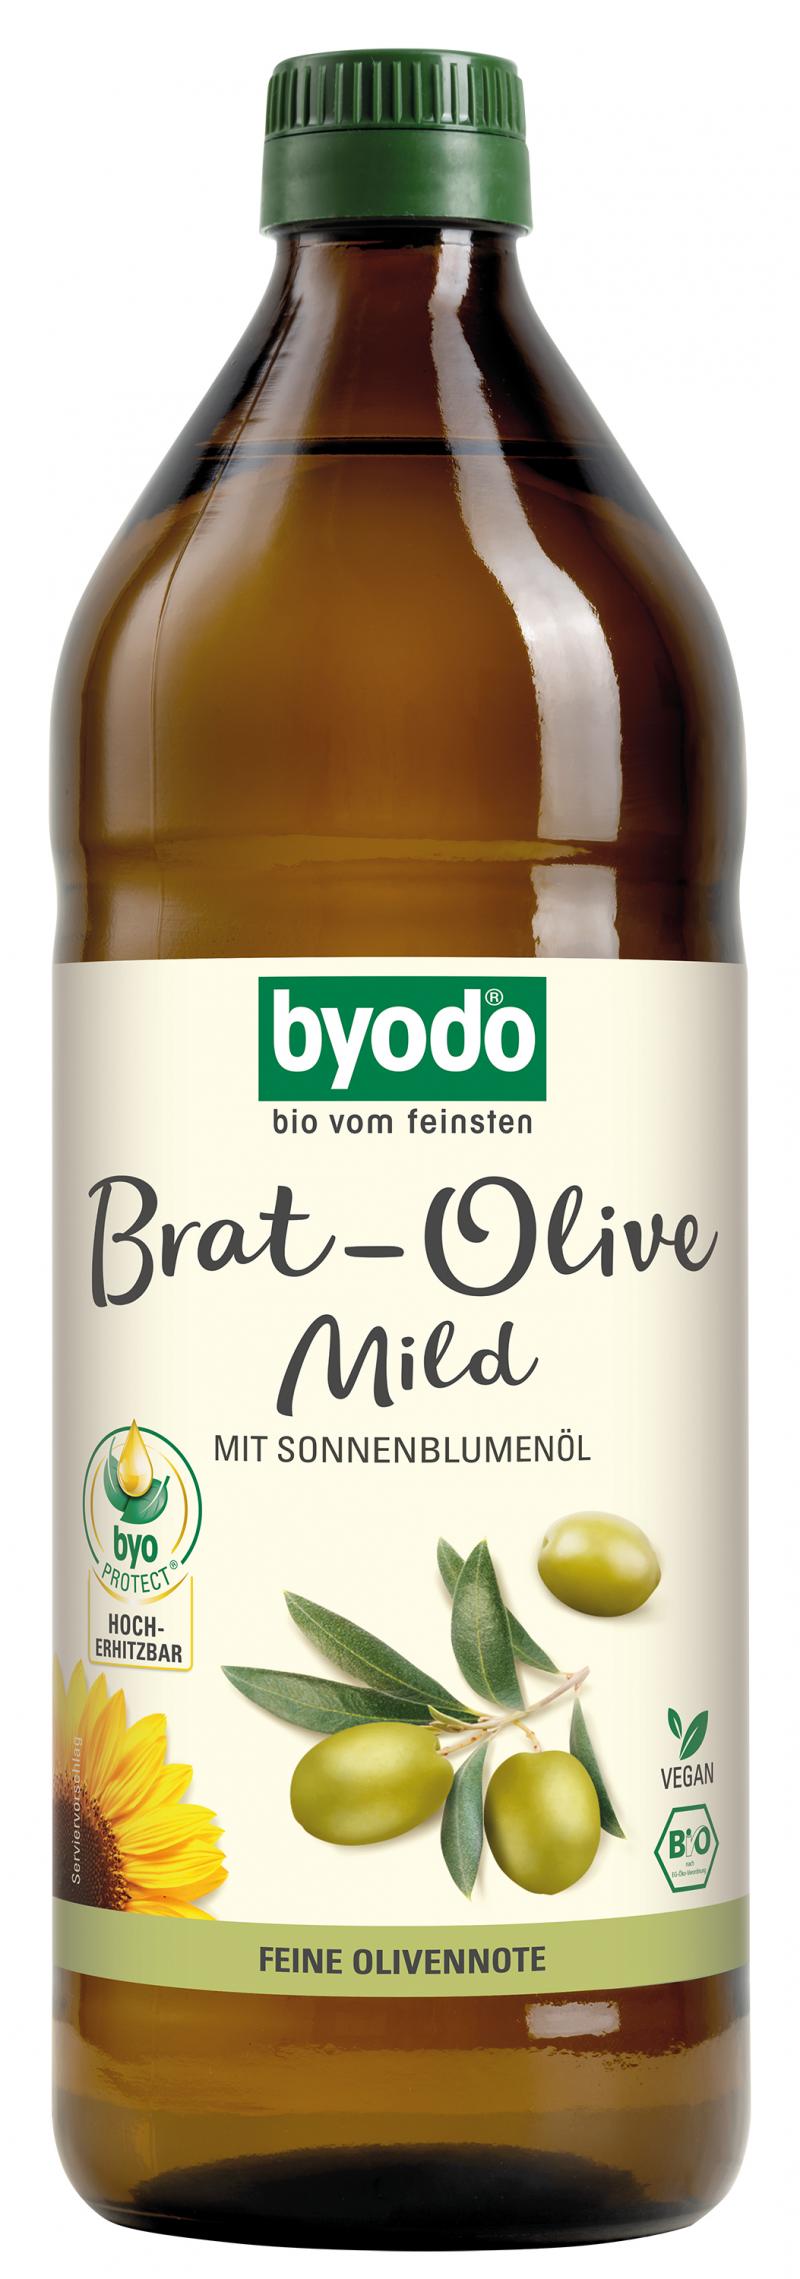 Byodo Brat-Olive mild mit Sonnenblumenöl 0,75l